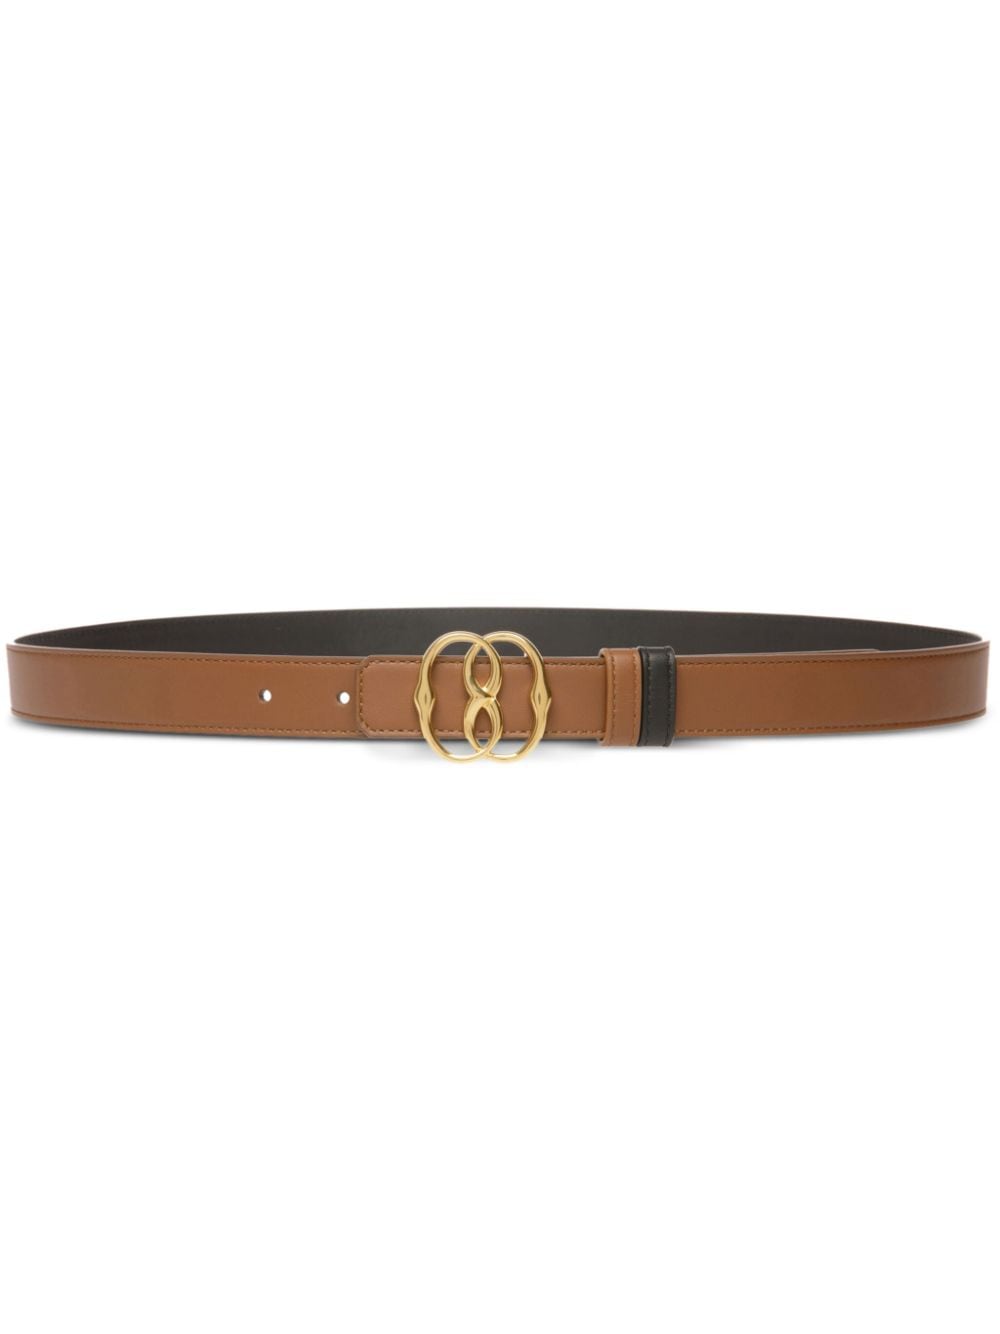 Emblem leather belt